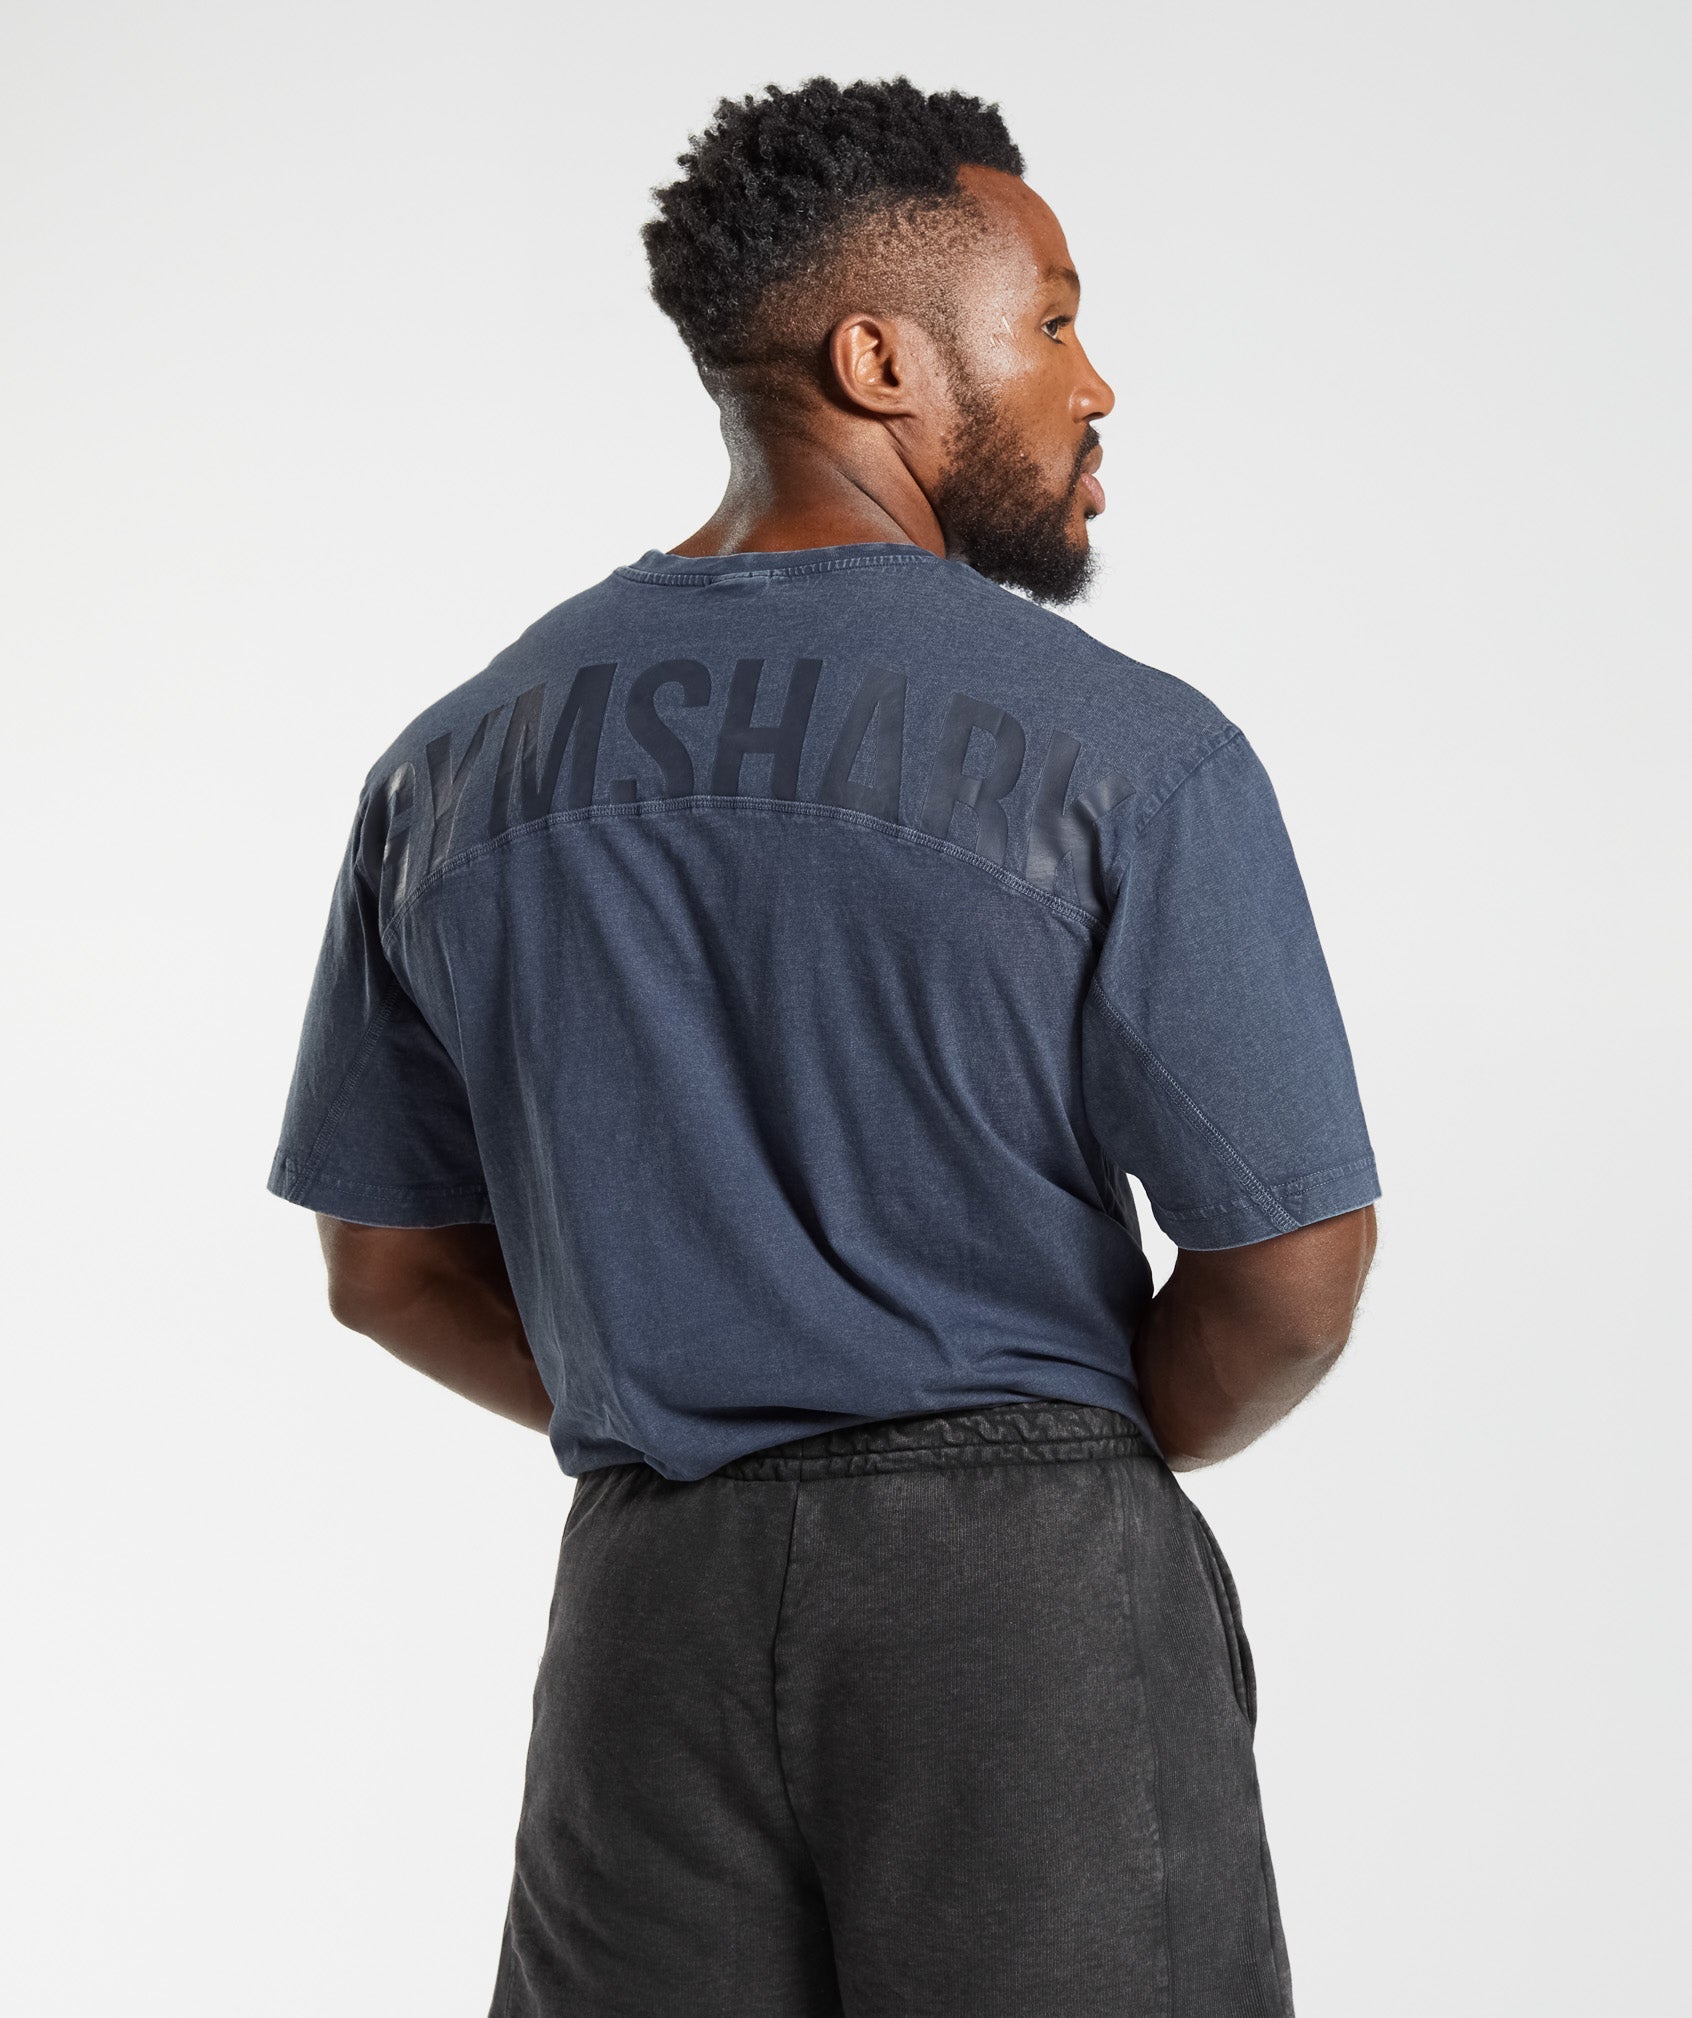 Vital Apparel Premium Pump Covers Oversized Shirts – VITAL APPAREL